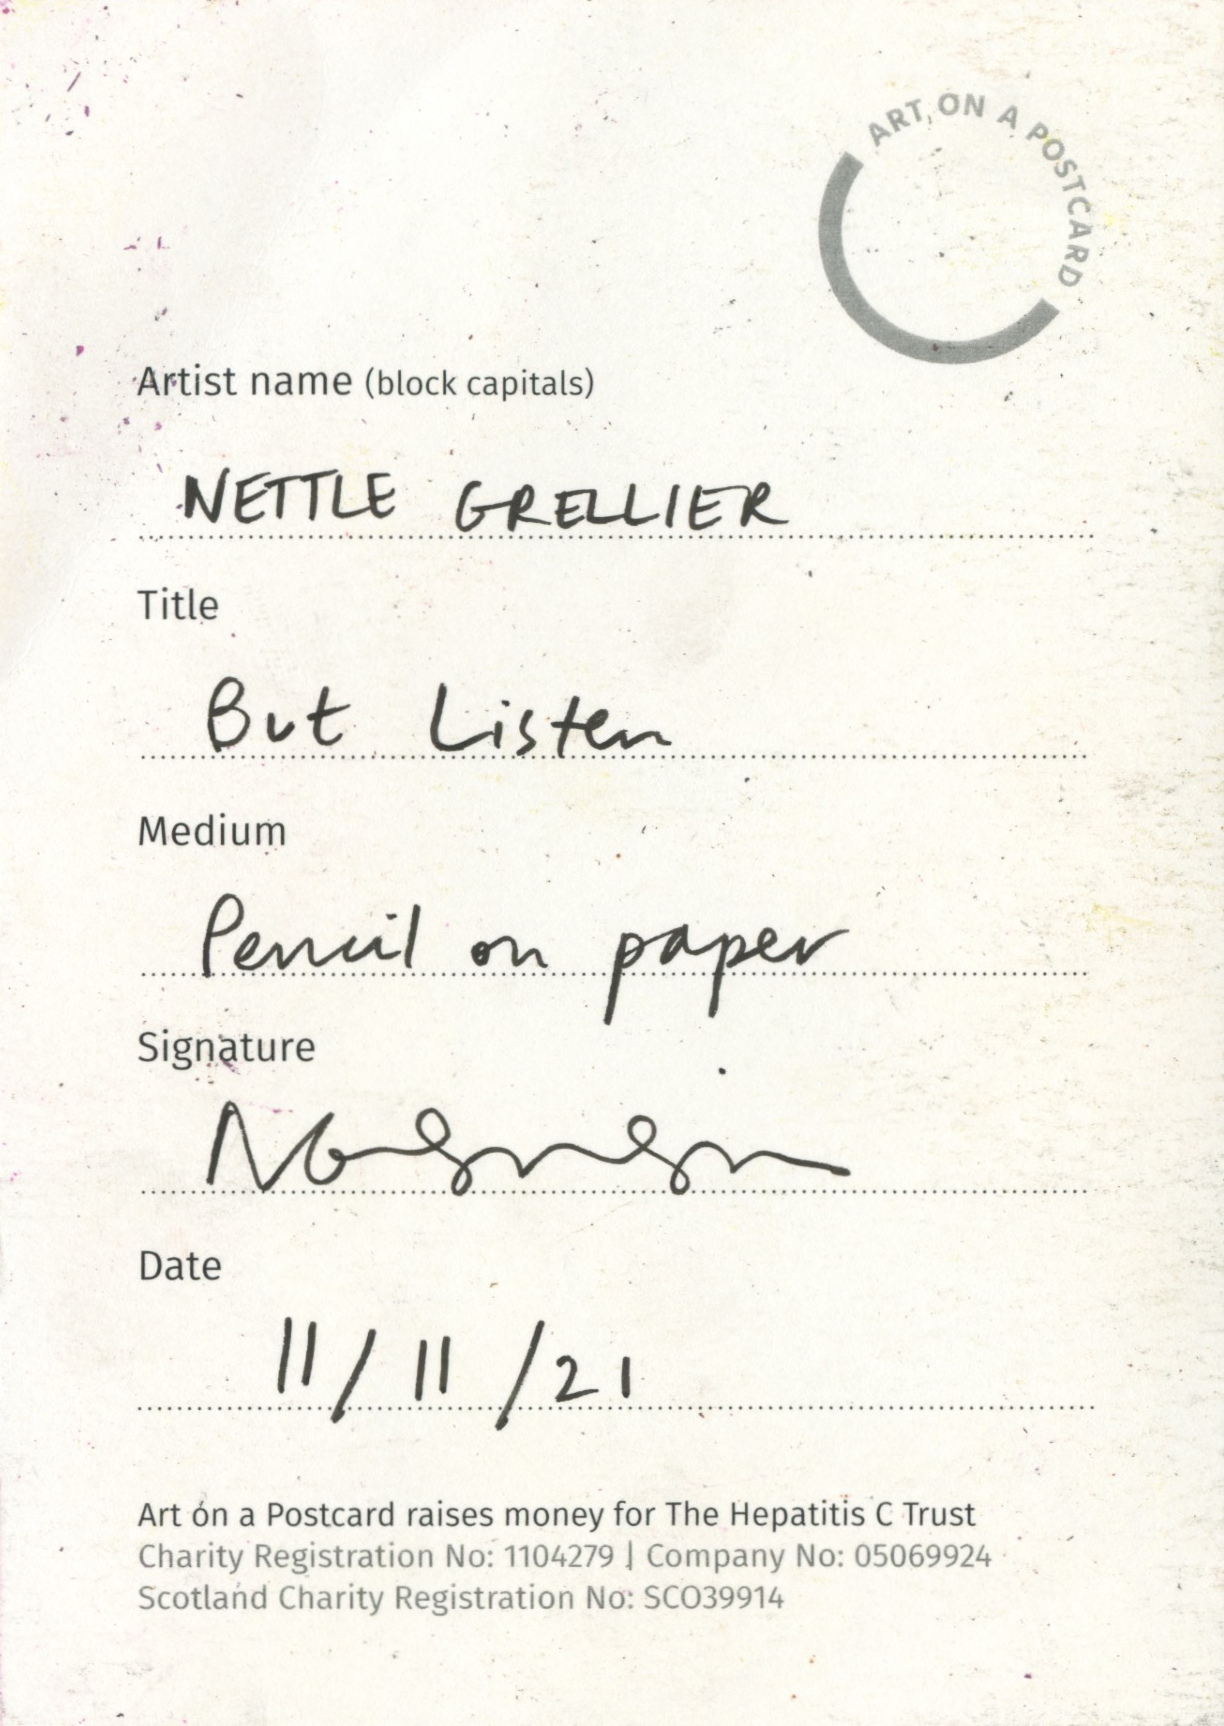 7. Nettle Grellier - But Listen - BACK